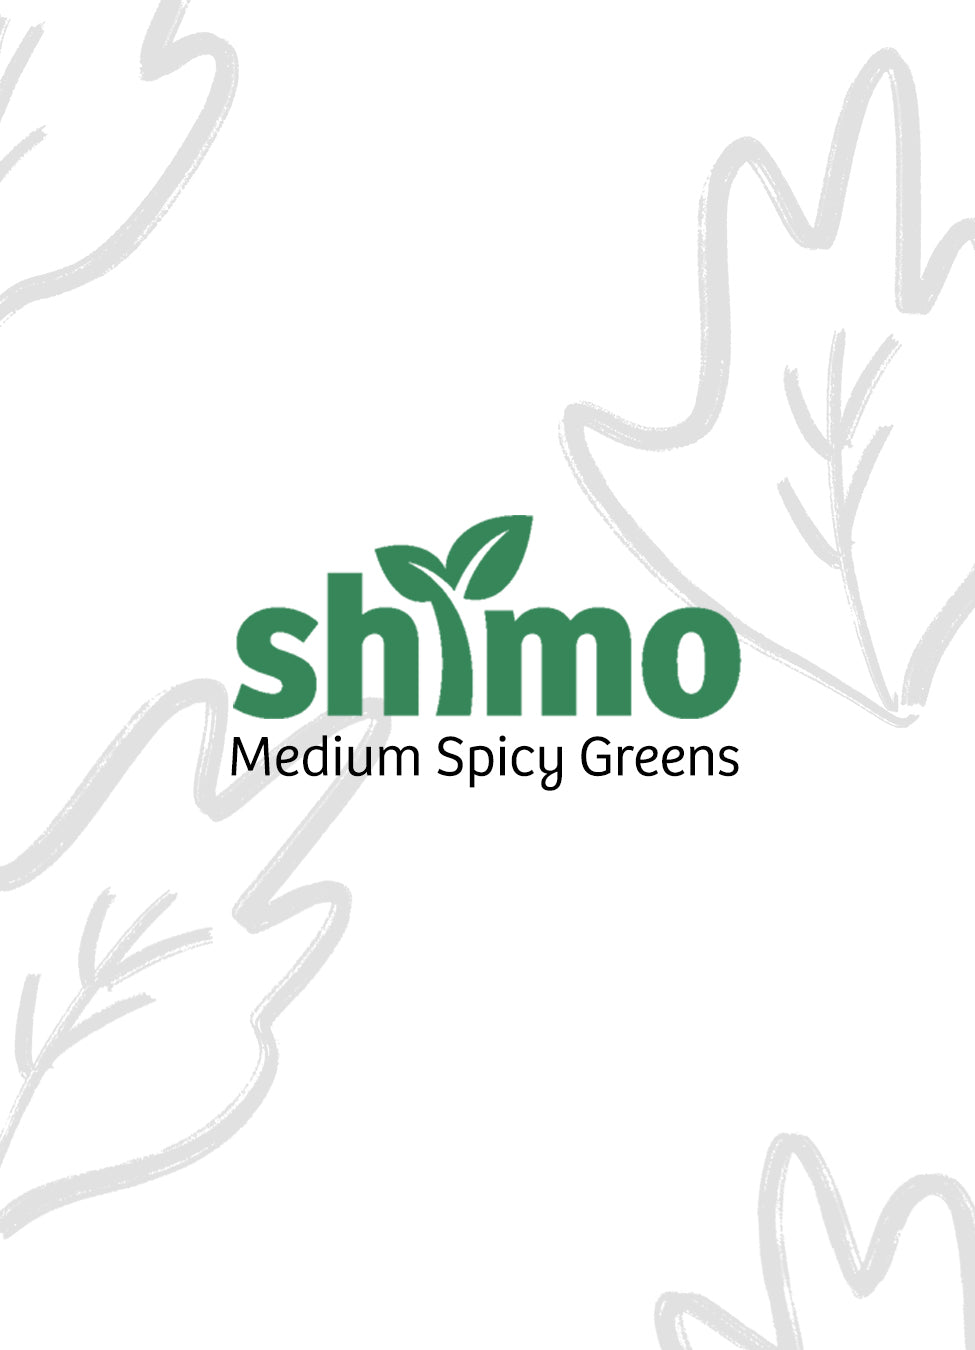 Medium Spicy Greens Seed Packet